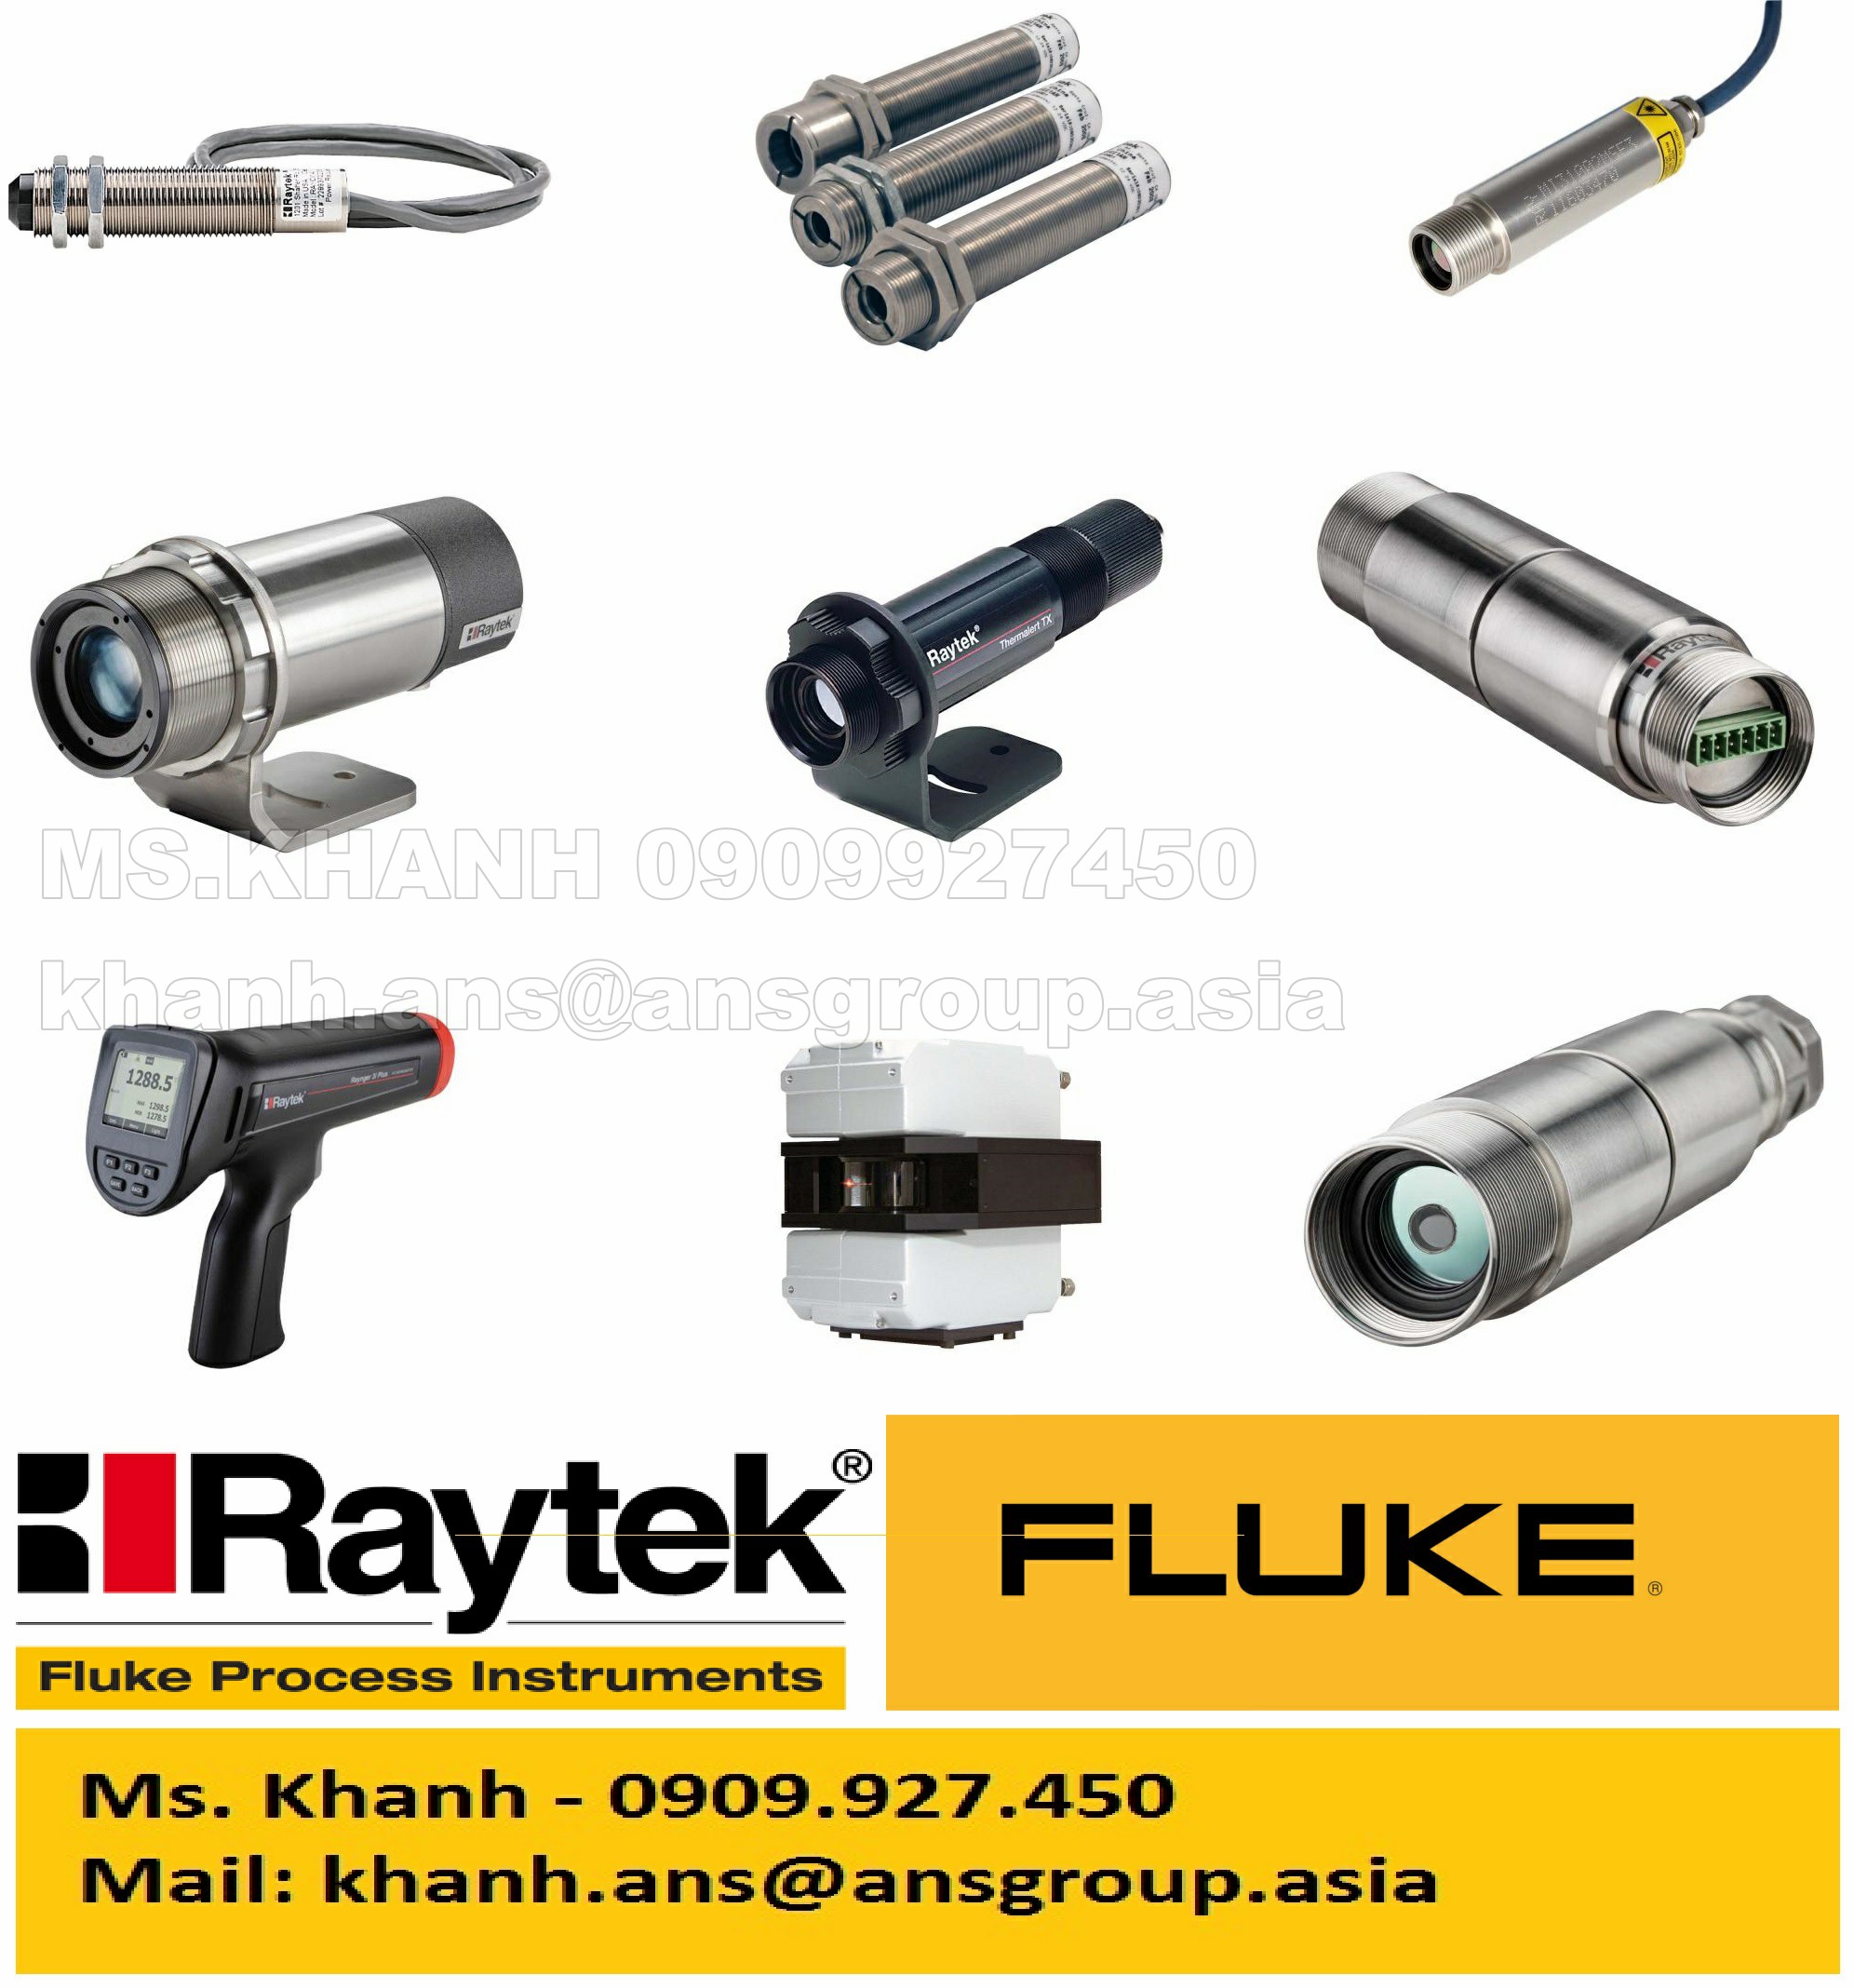 phu-kien-raymi3comm4-communication-box-raytek-fluke-process-instrument-vietnam.png